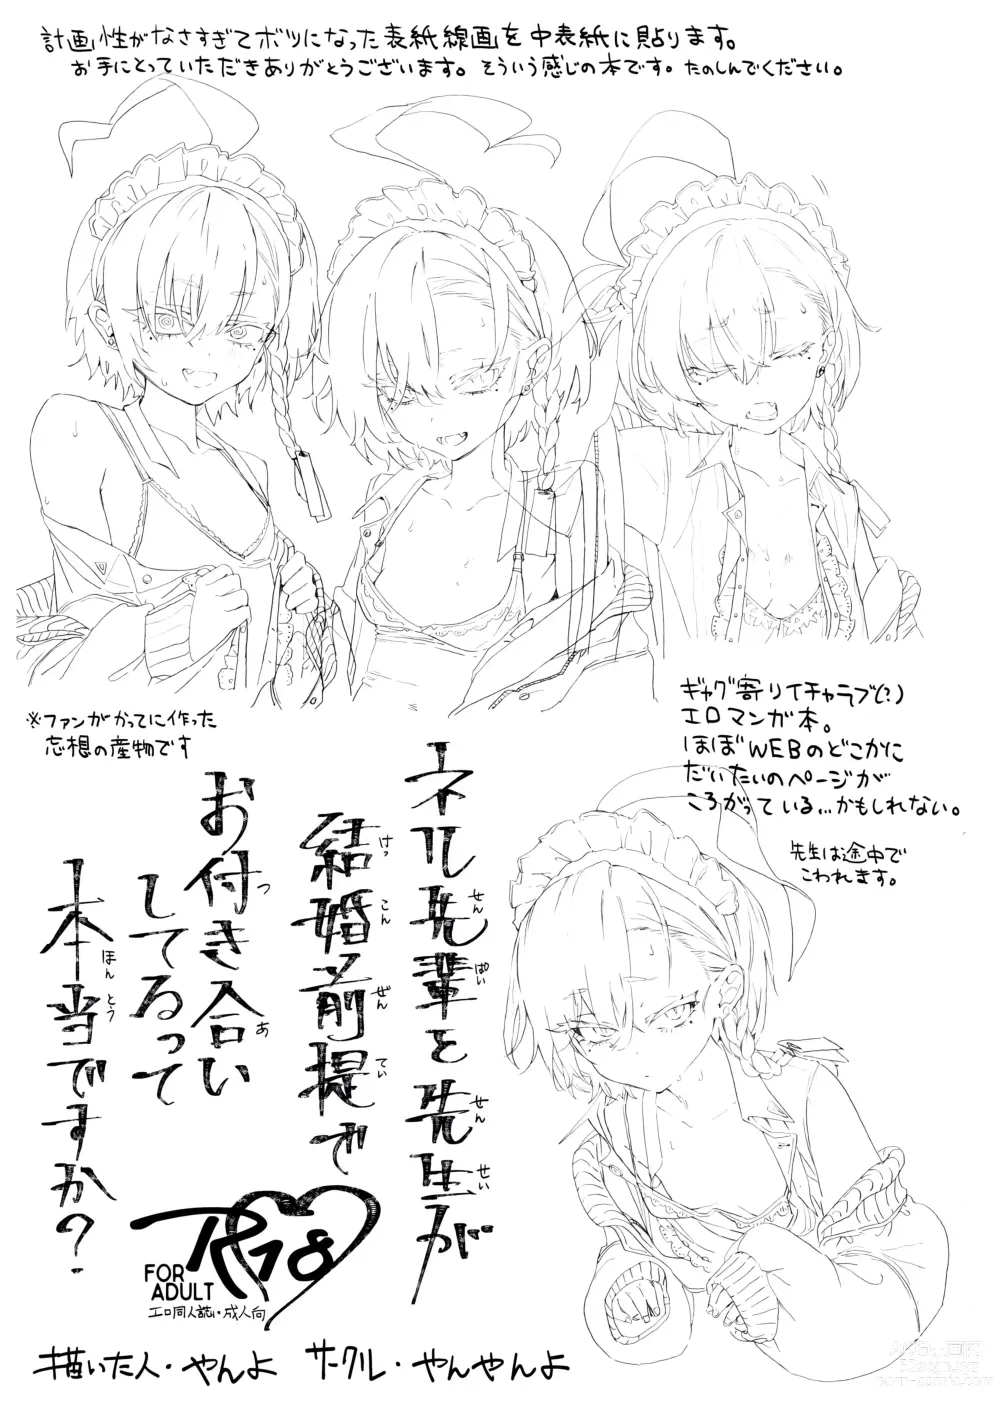 Page 2 of doujinshi 네루 선배와 선생님이 결혼을 전제로 사귀고 있다는 게 정말인가요?